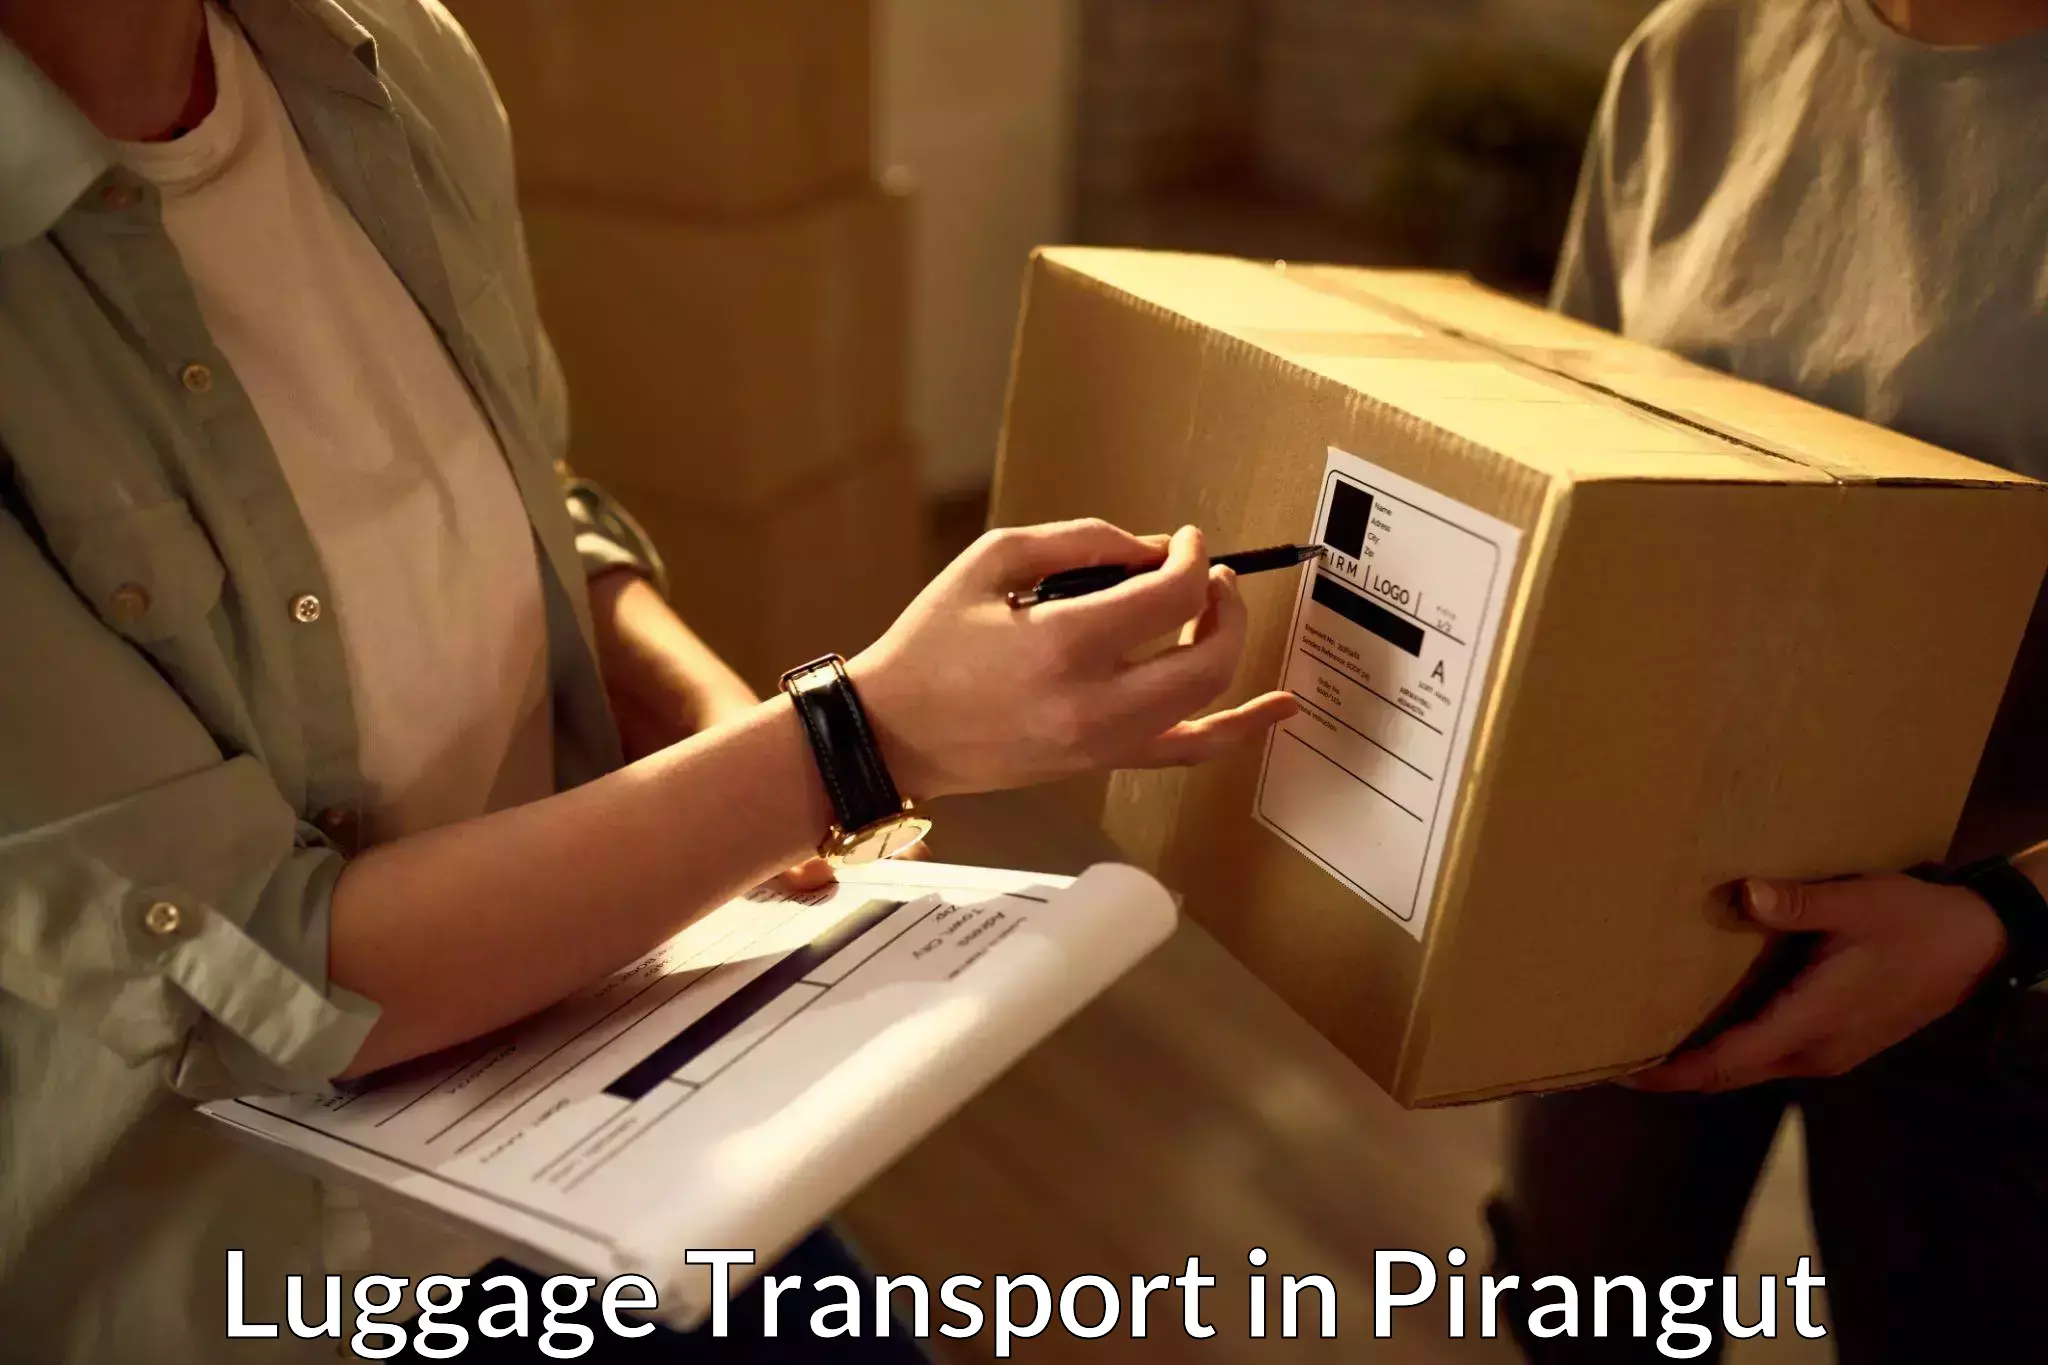 Domestic luggage transport in Pirangut